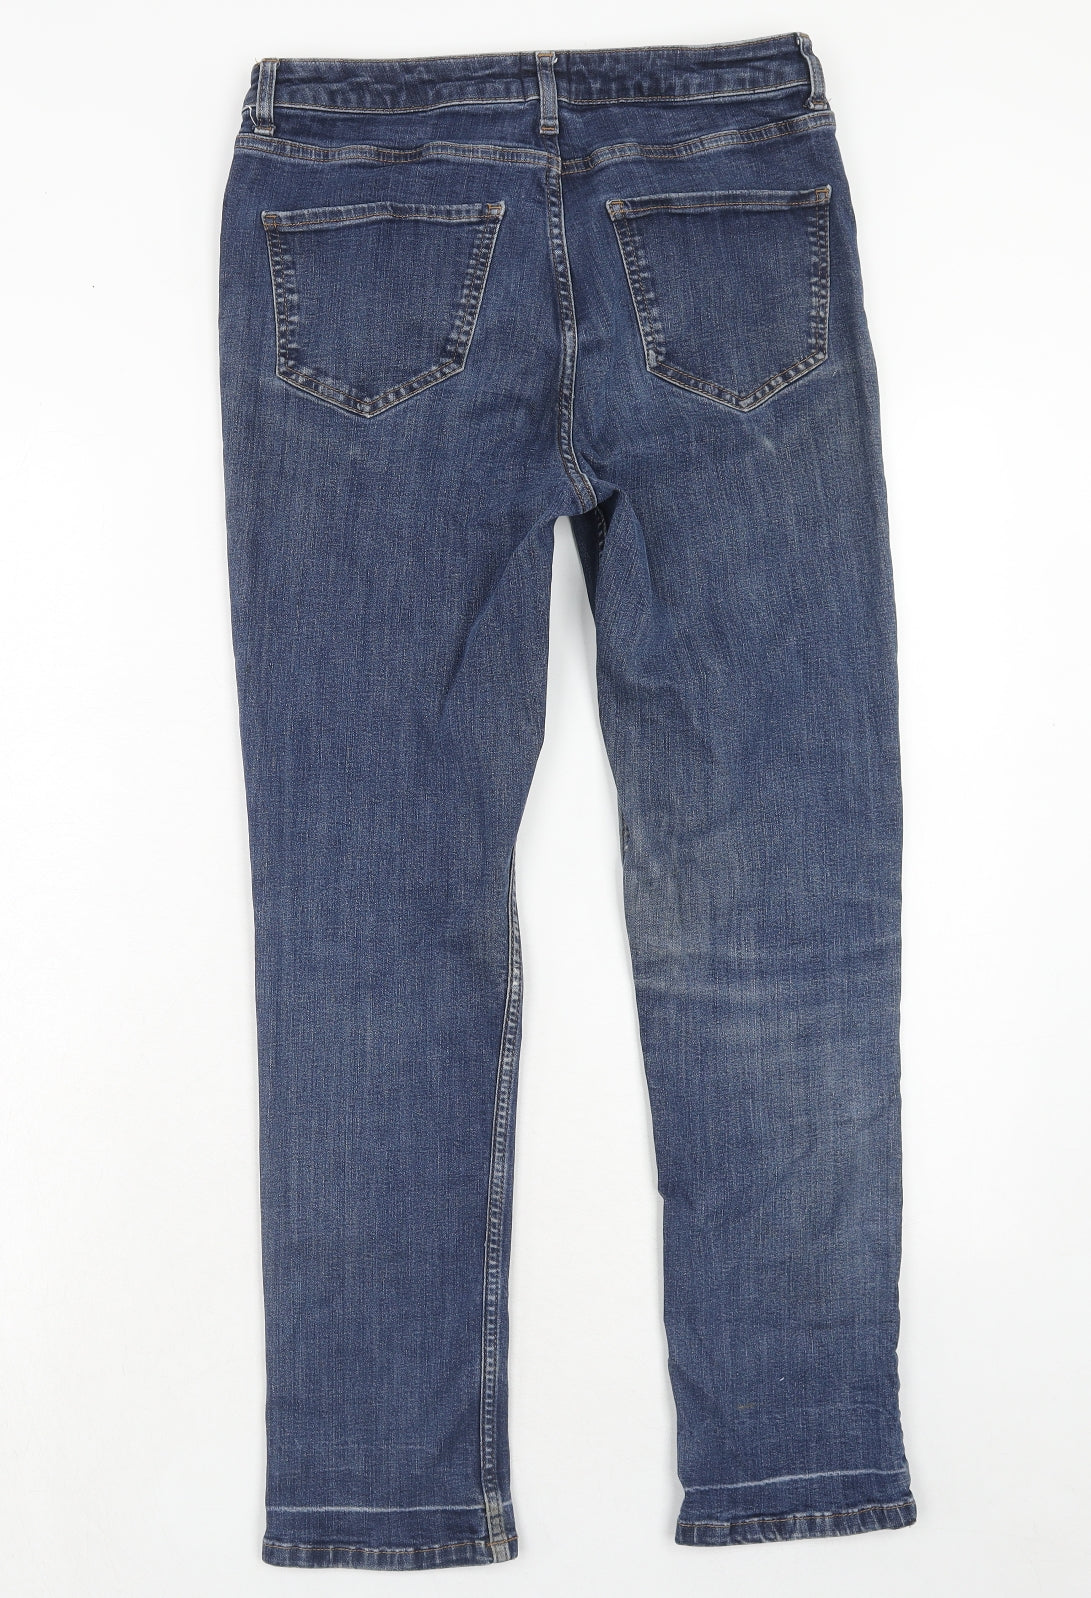 John Lewis Boys Blue Cotton Skinny Jeans Size 12 Years Regular Zip